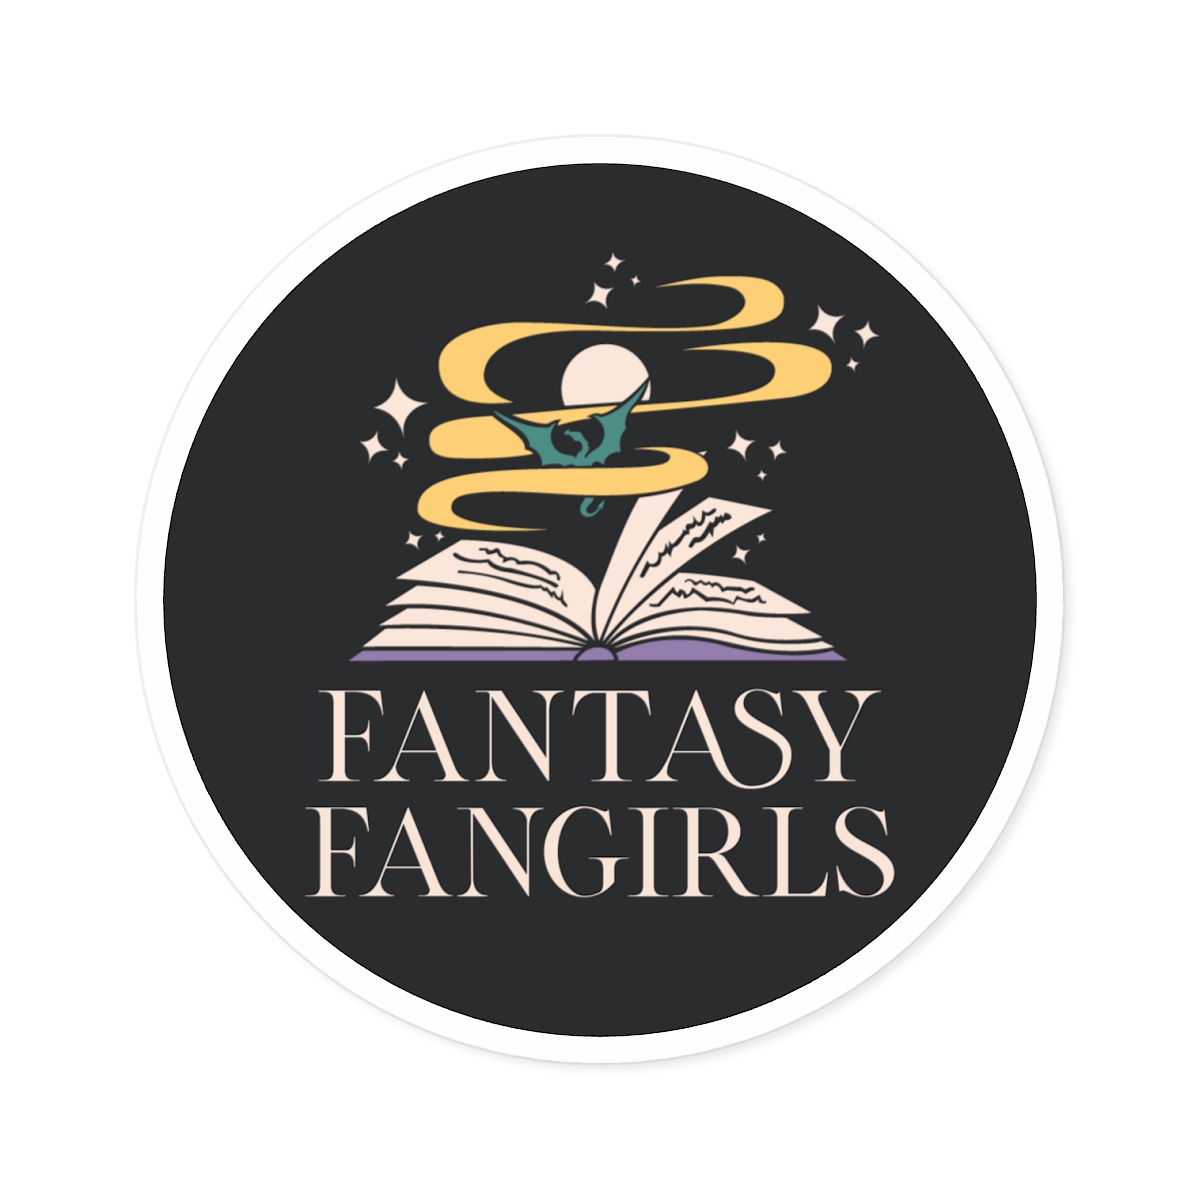 Fantasy Fangirls Round Sticker product thumbnail image